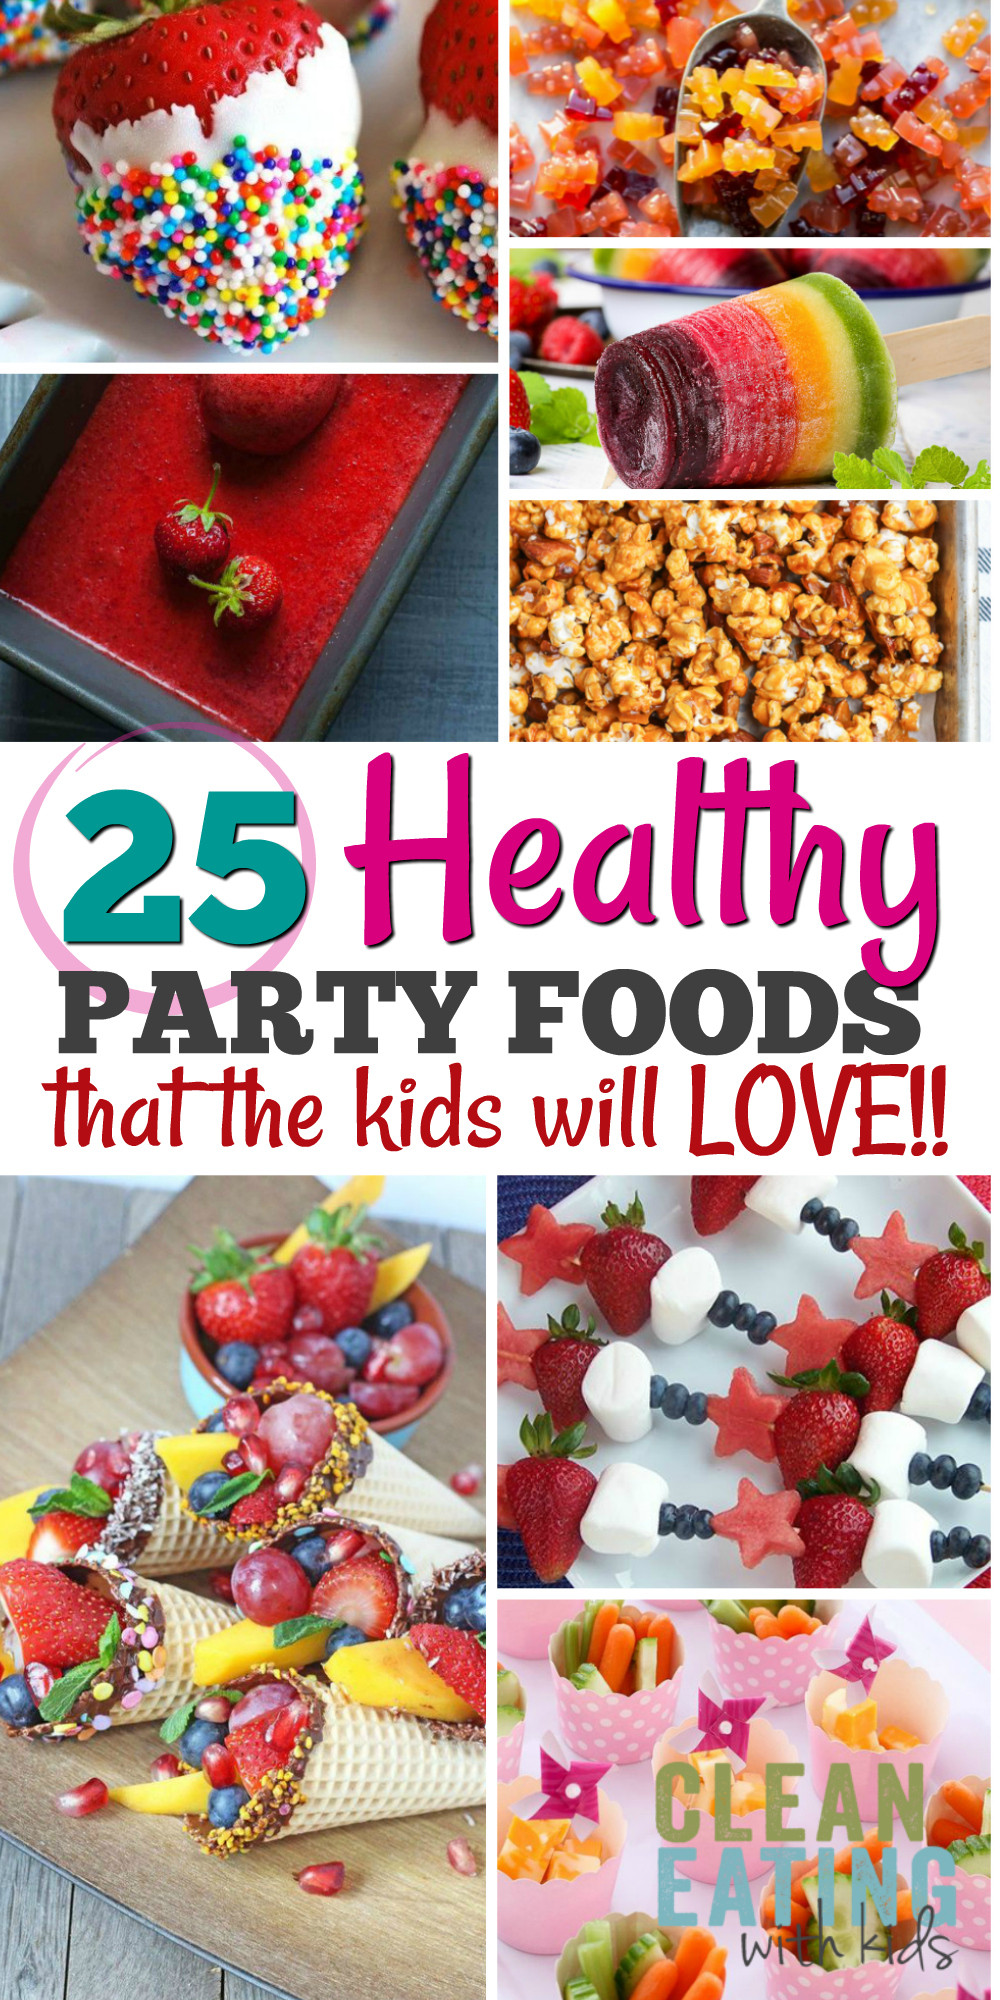 Children Birthday Party Food Ideas
 25 Healthy Birthday Party Food Ideas Clean Eating with kids